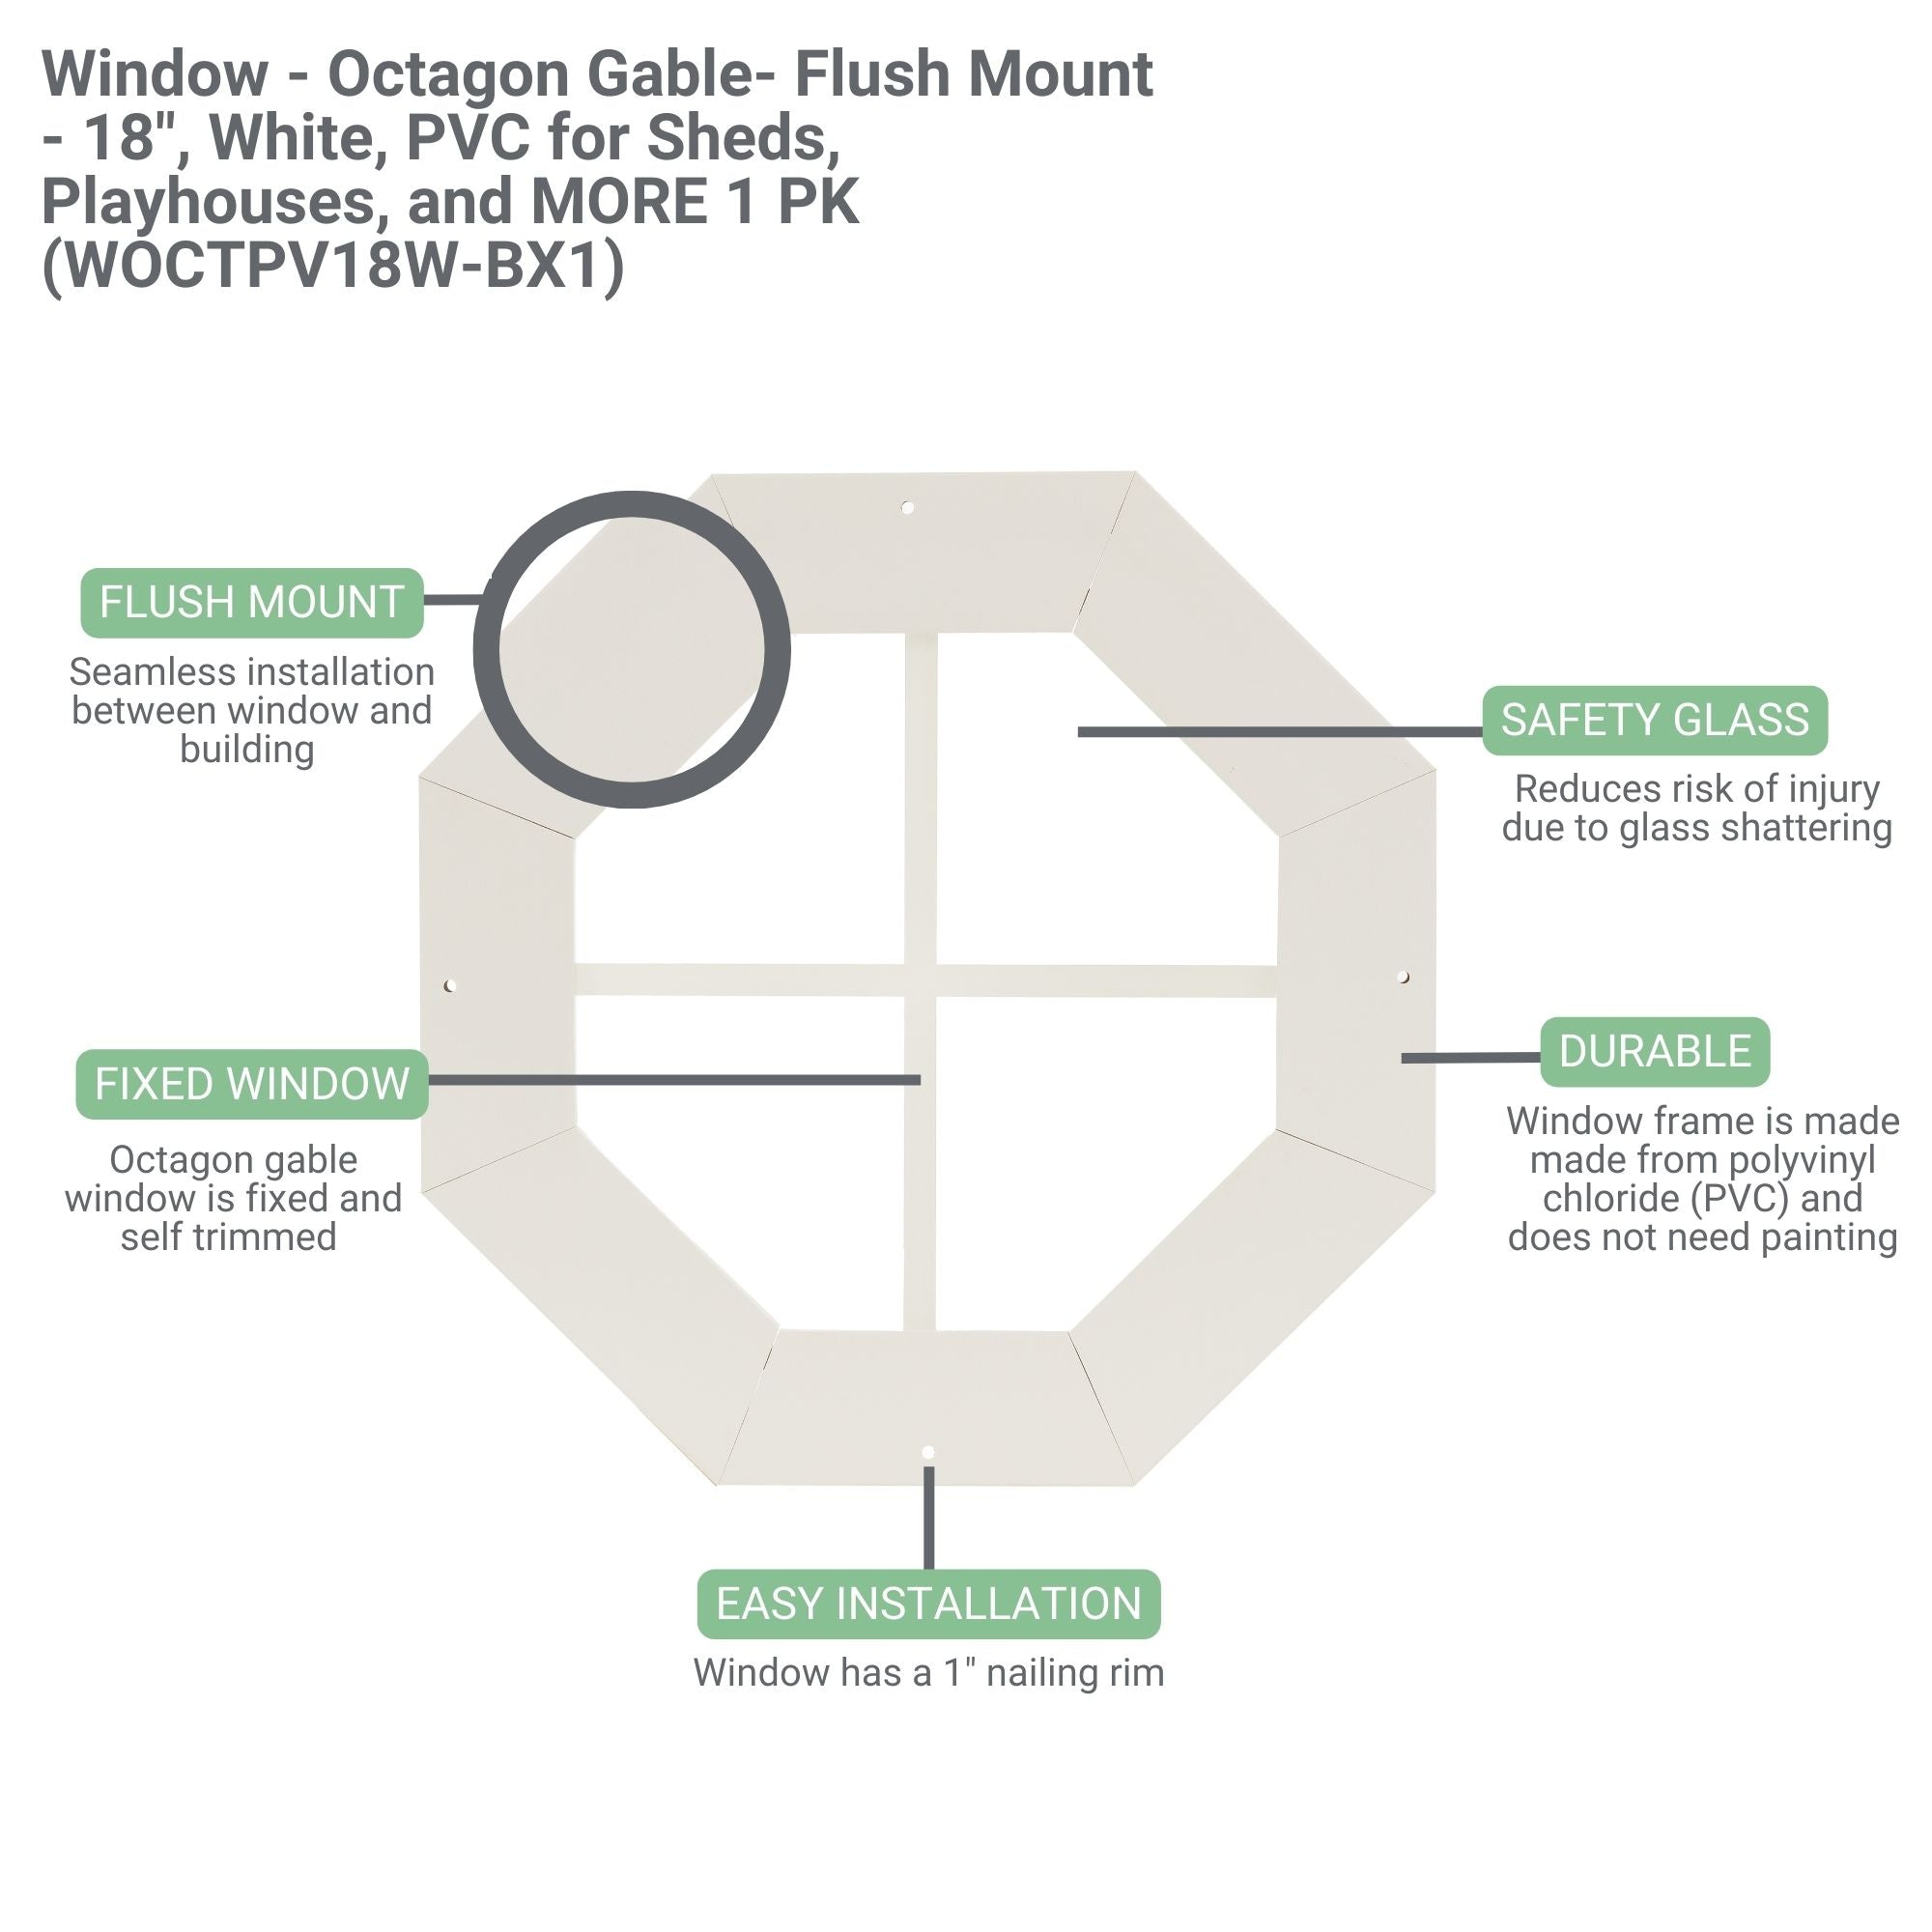 18" Octagon Gable Flush Mount Shed Window, PVC